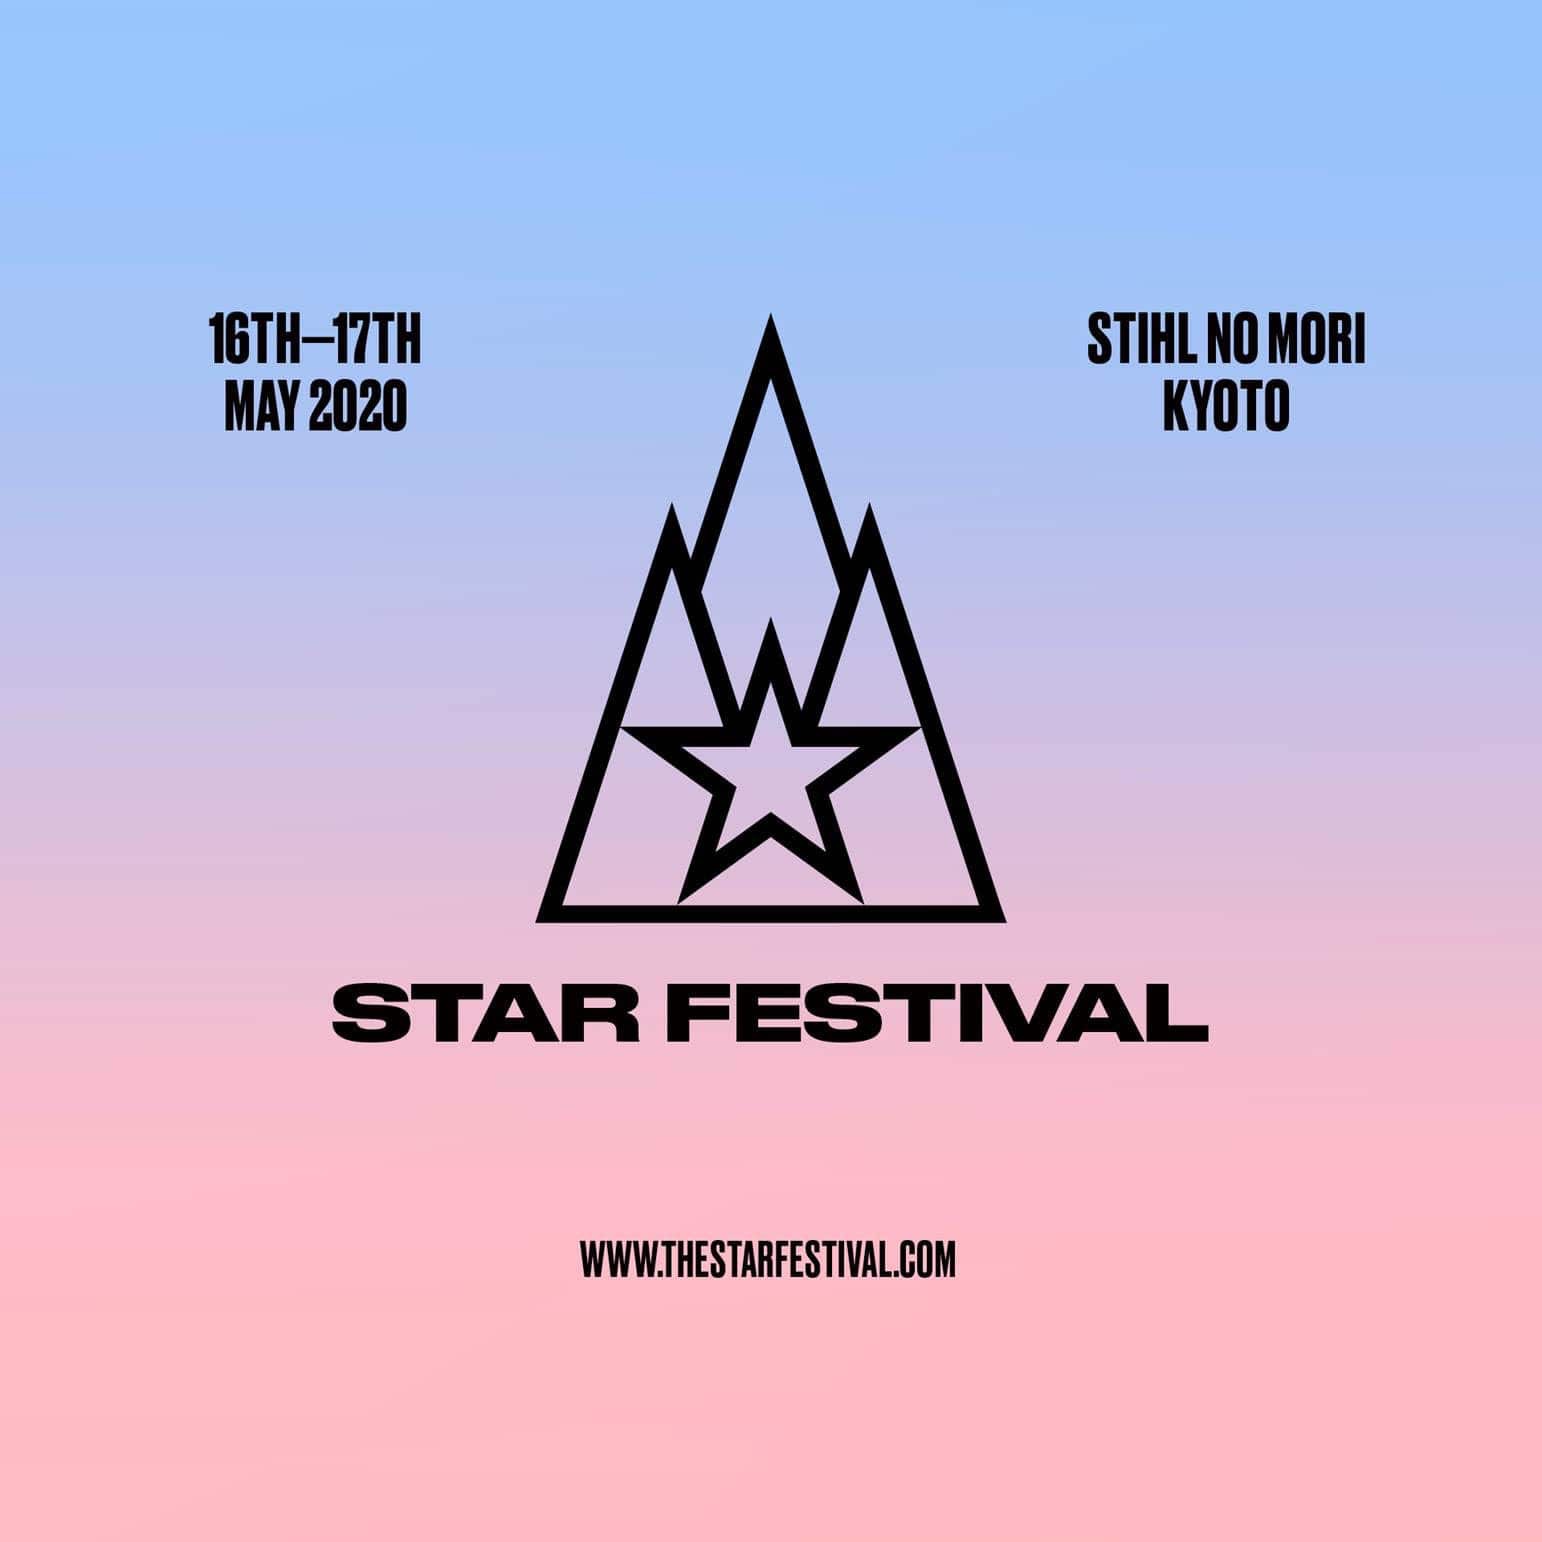 Starfestival 2020: Early Bird Discount Tickets On Sale Now